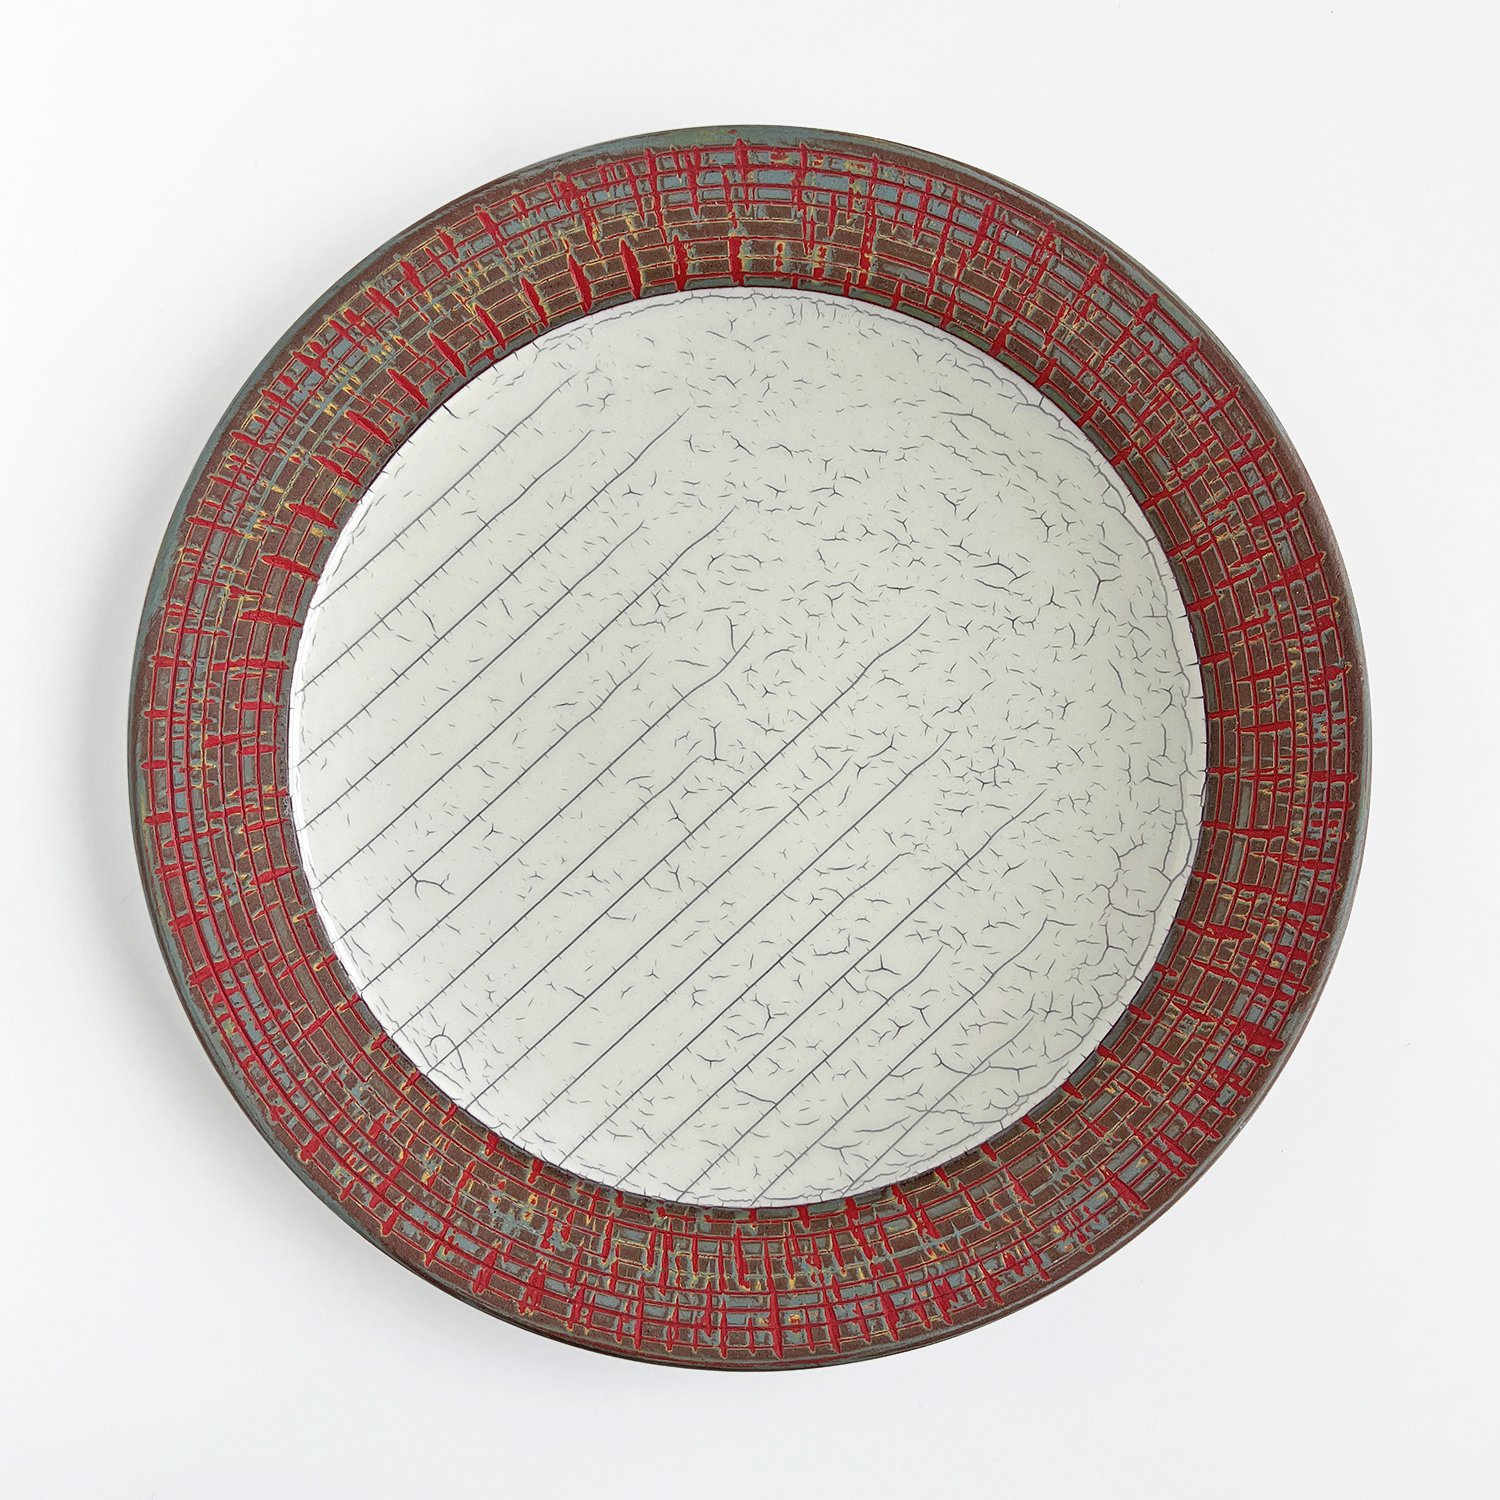 Crackle stripe fade plate